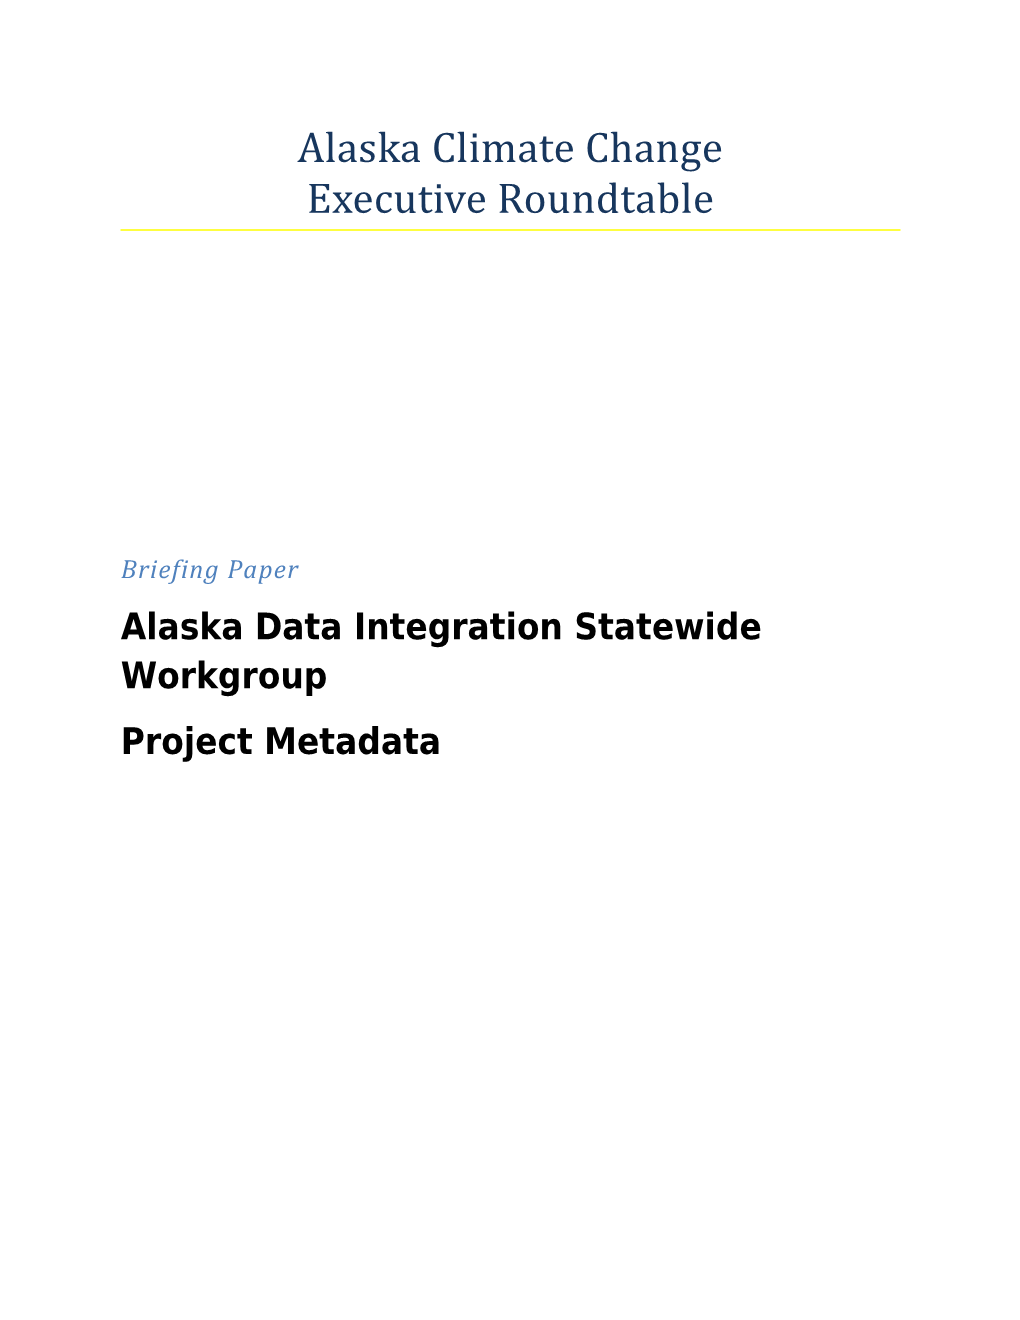 Alaska Data Integration Statewide Workgroup